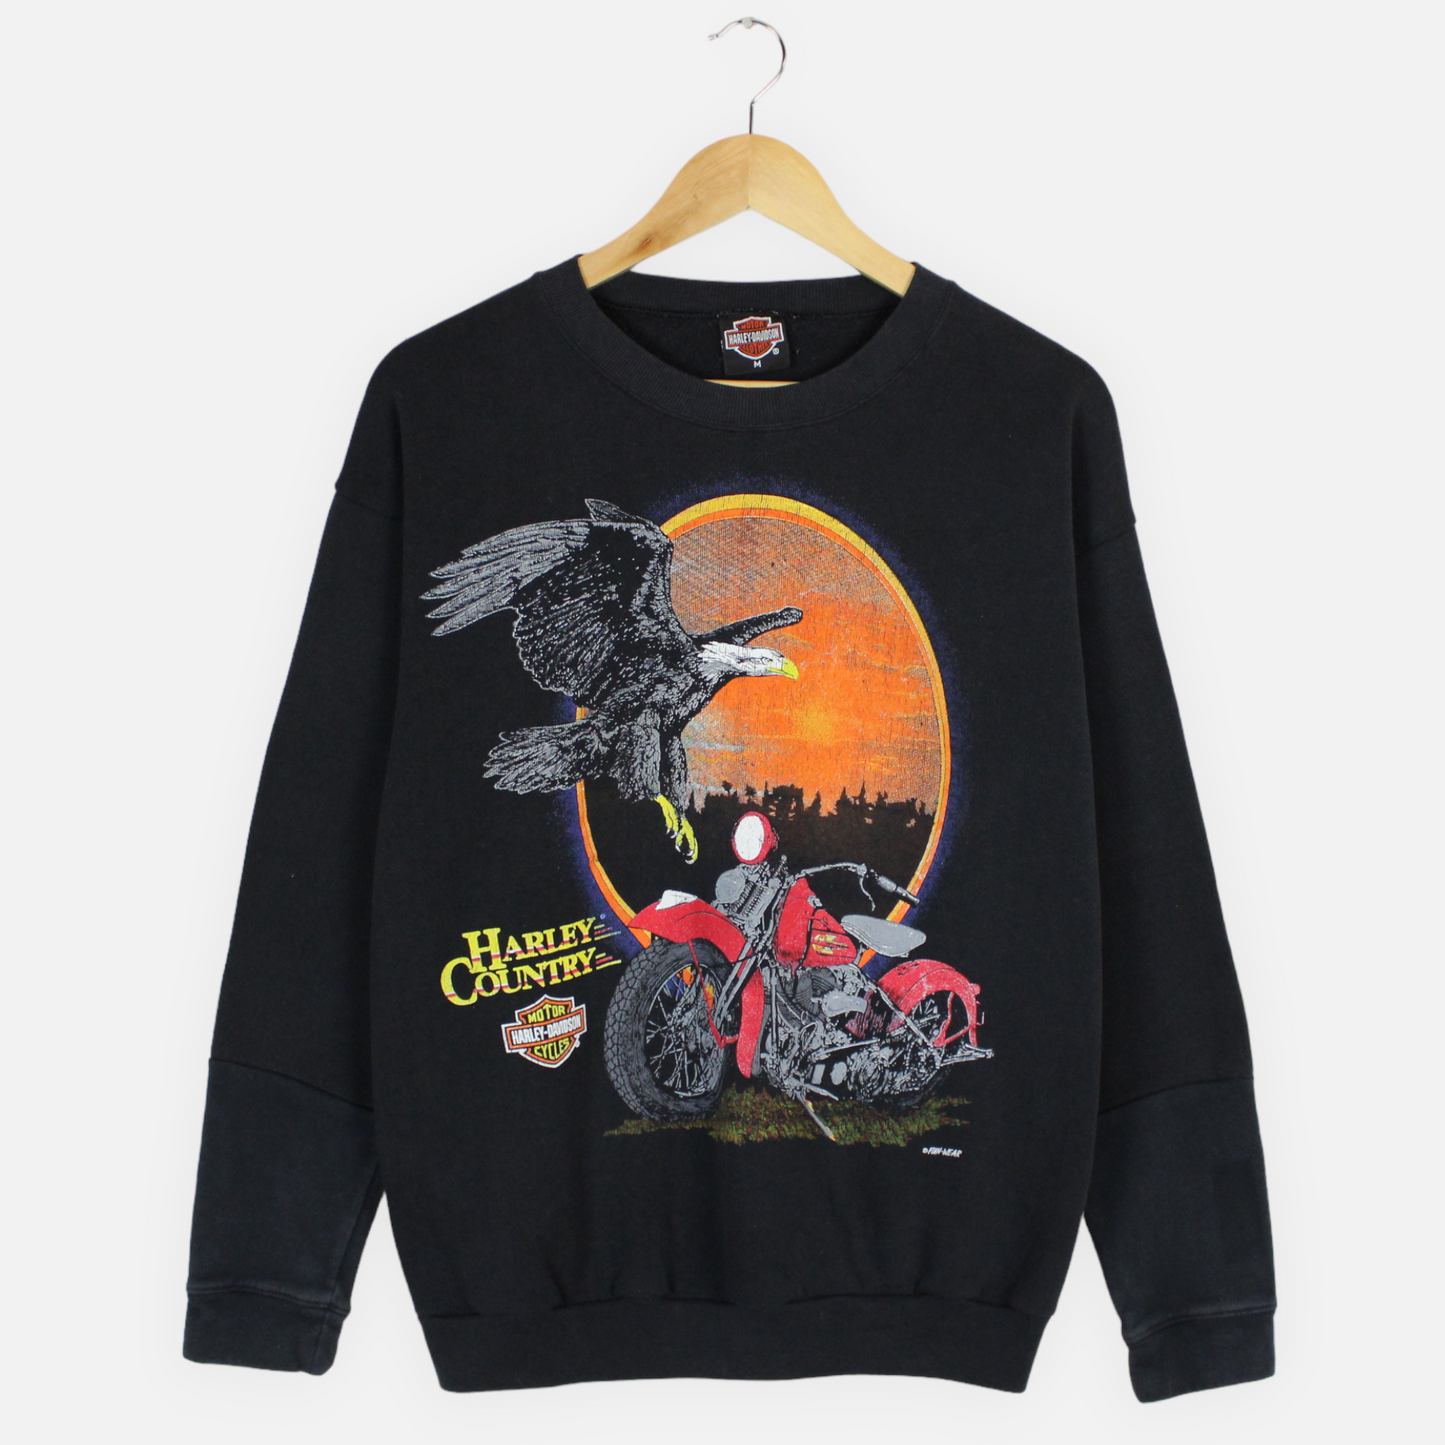 Vintage Harley Davidson Country Sweatshirt - M